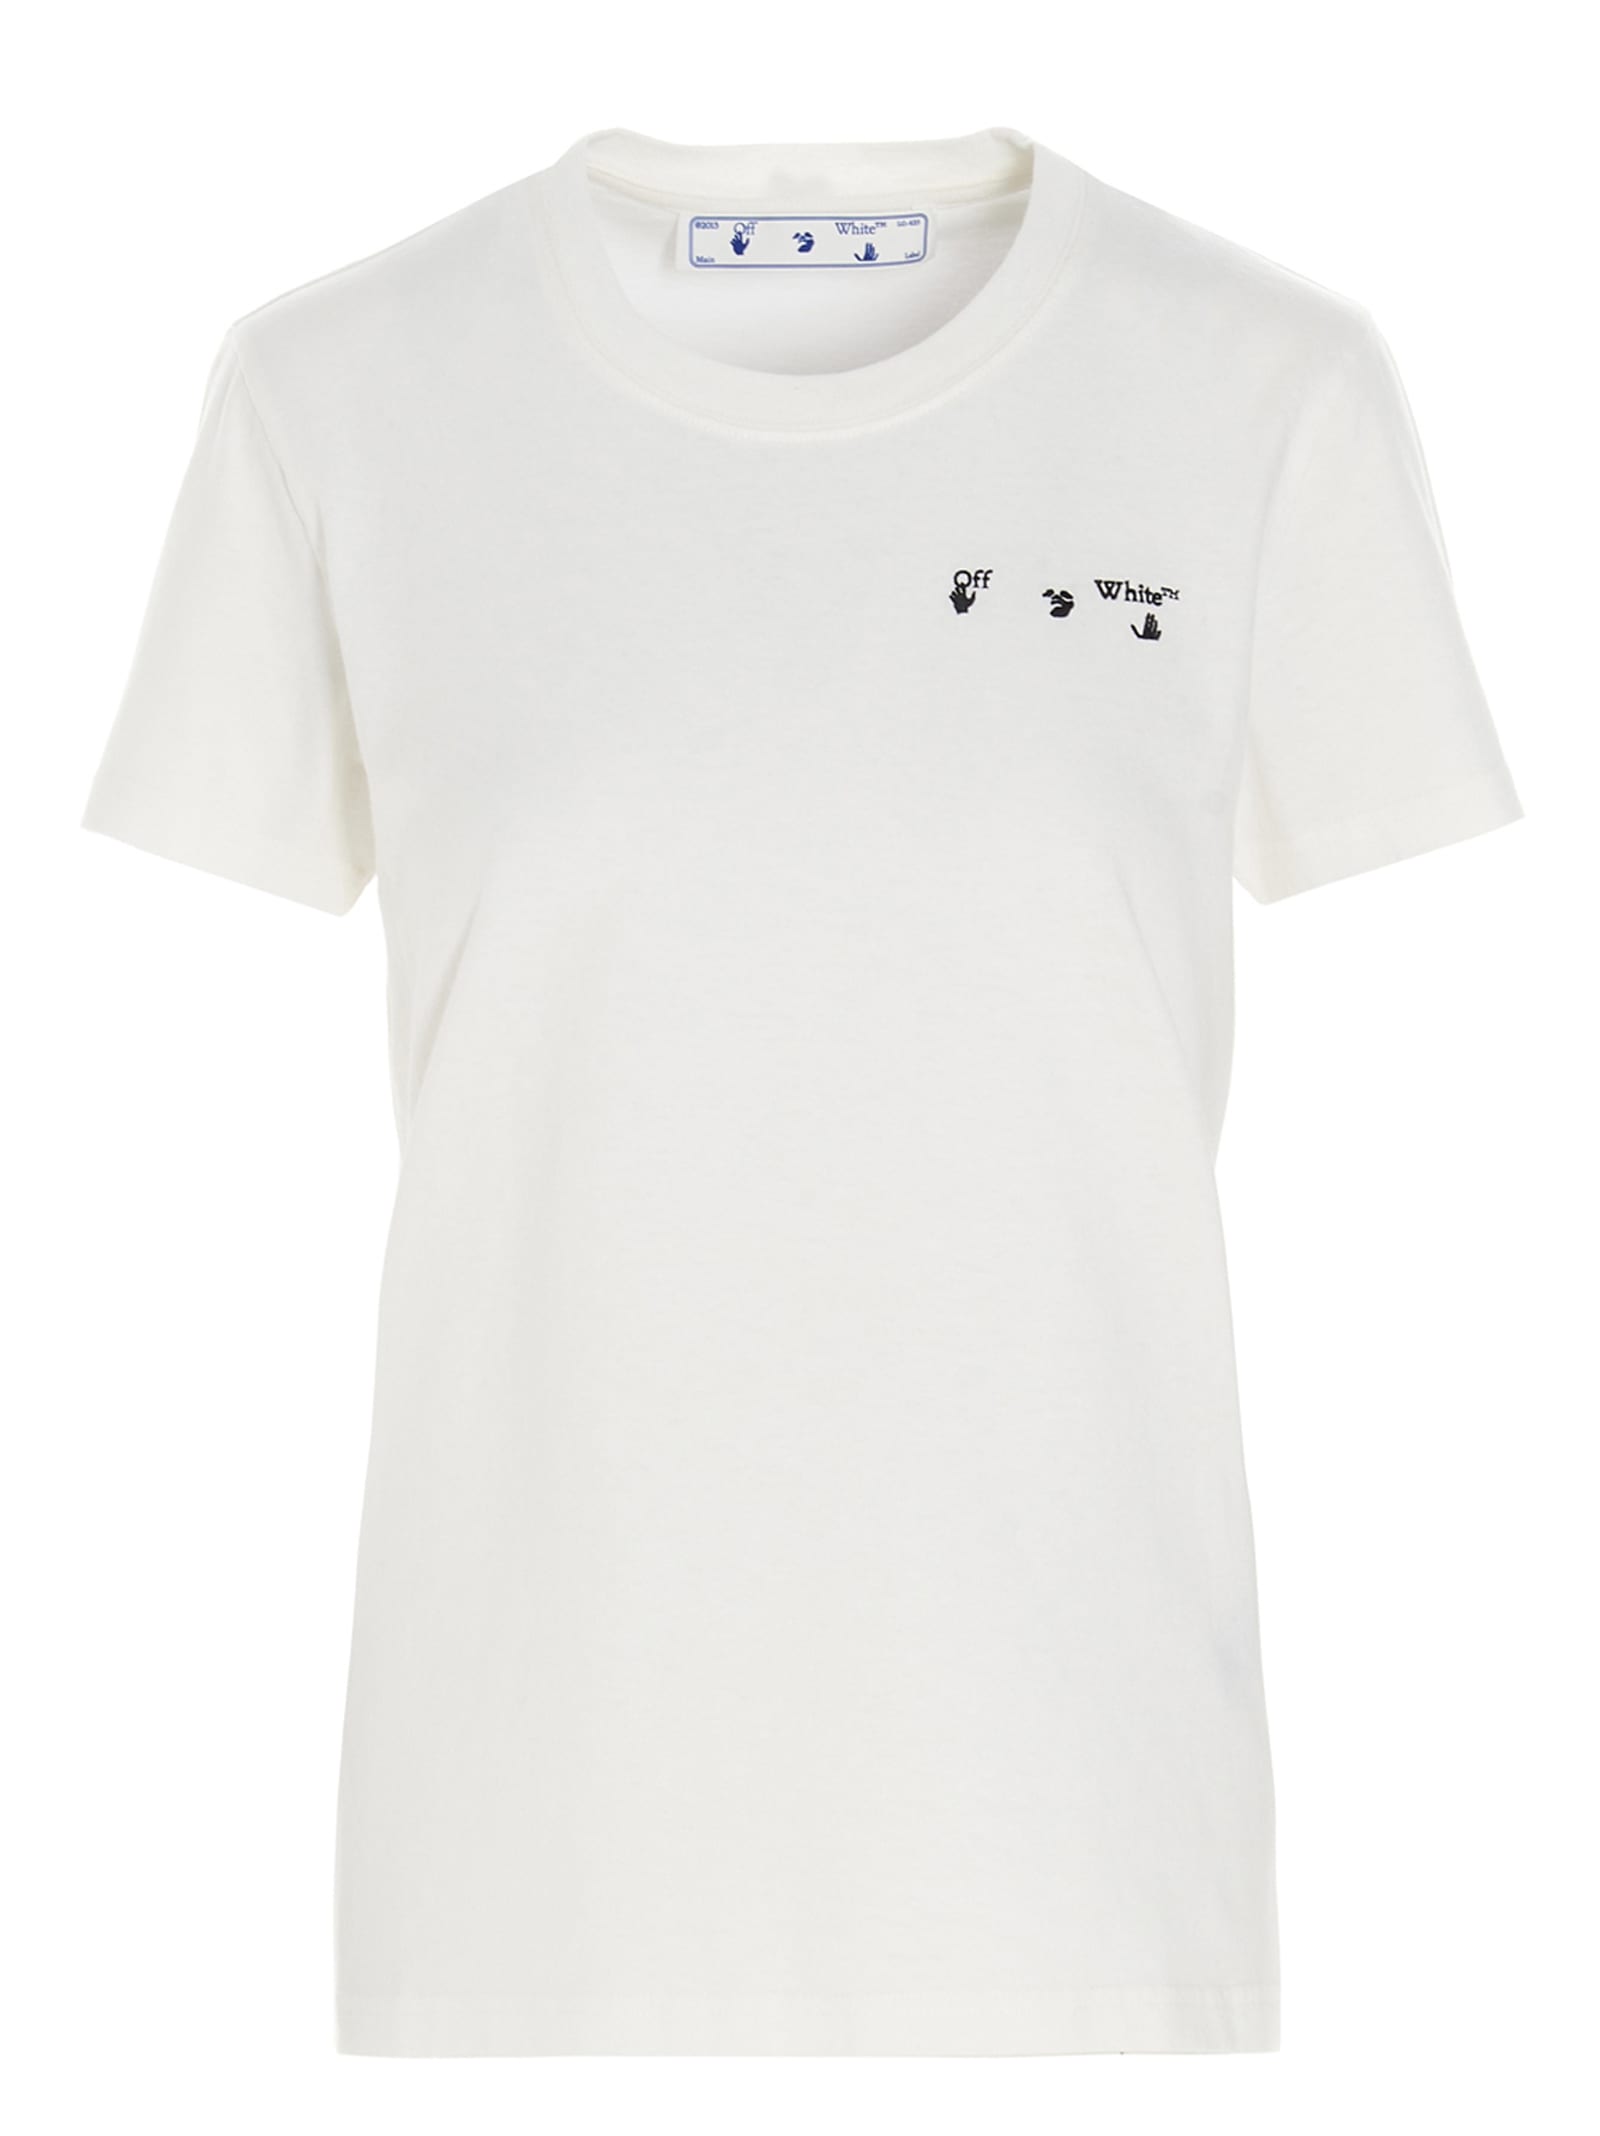 Off-white liquid Melt Arrow T-shirt